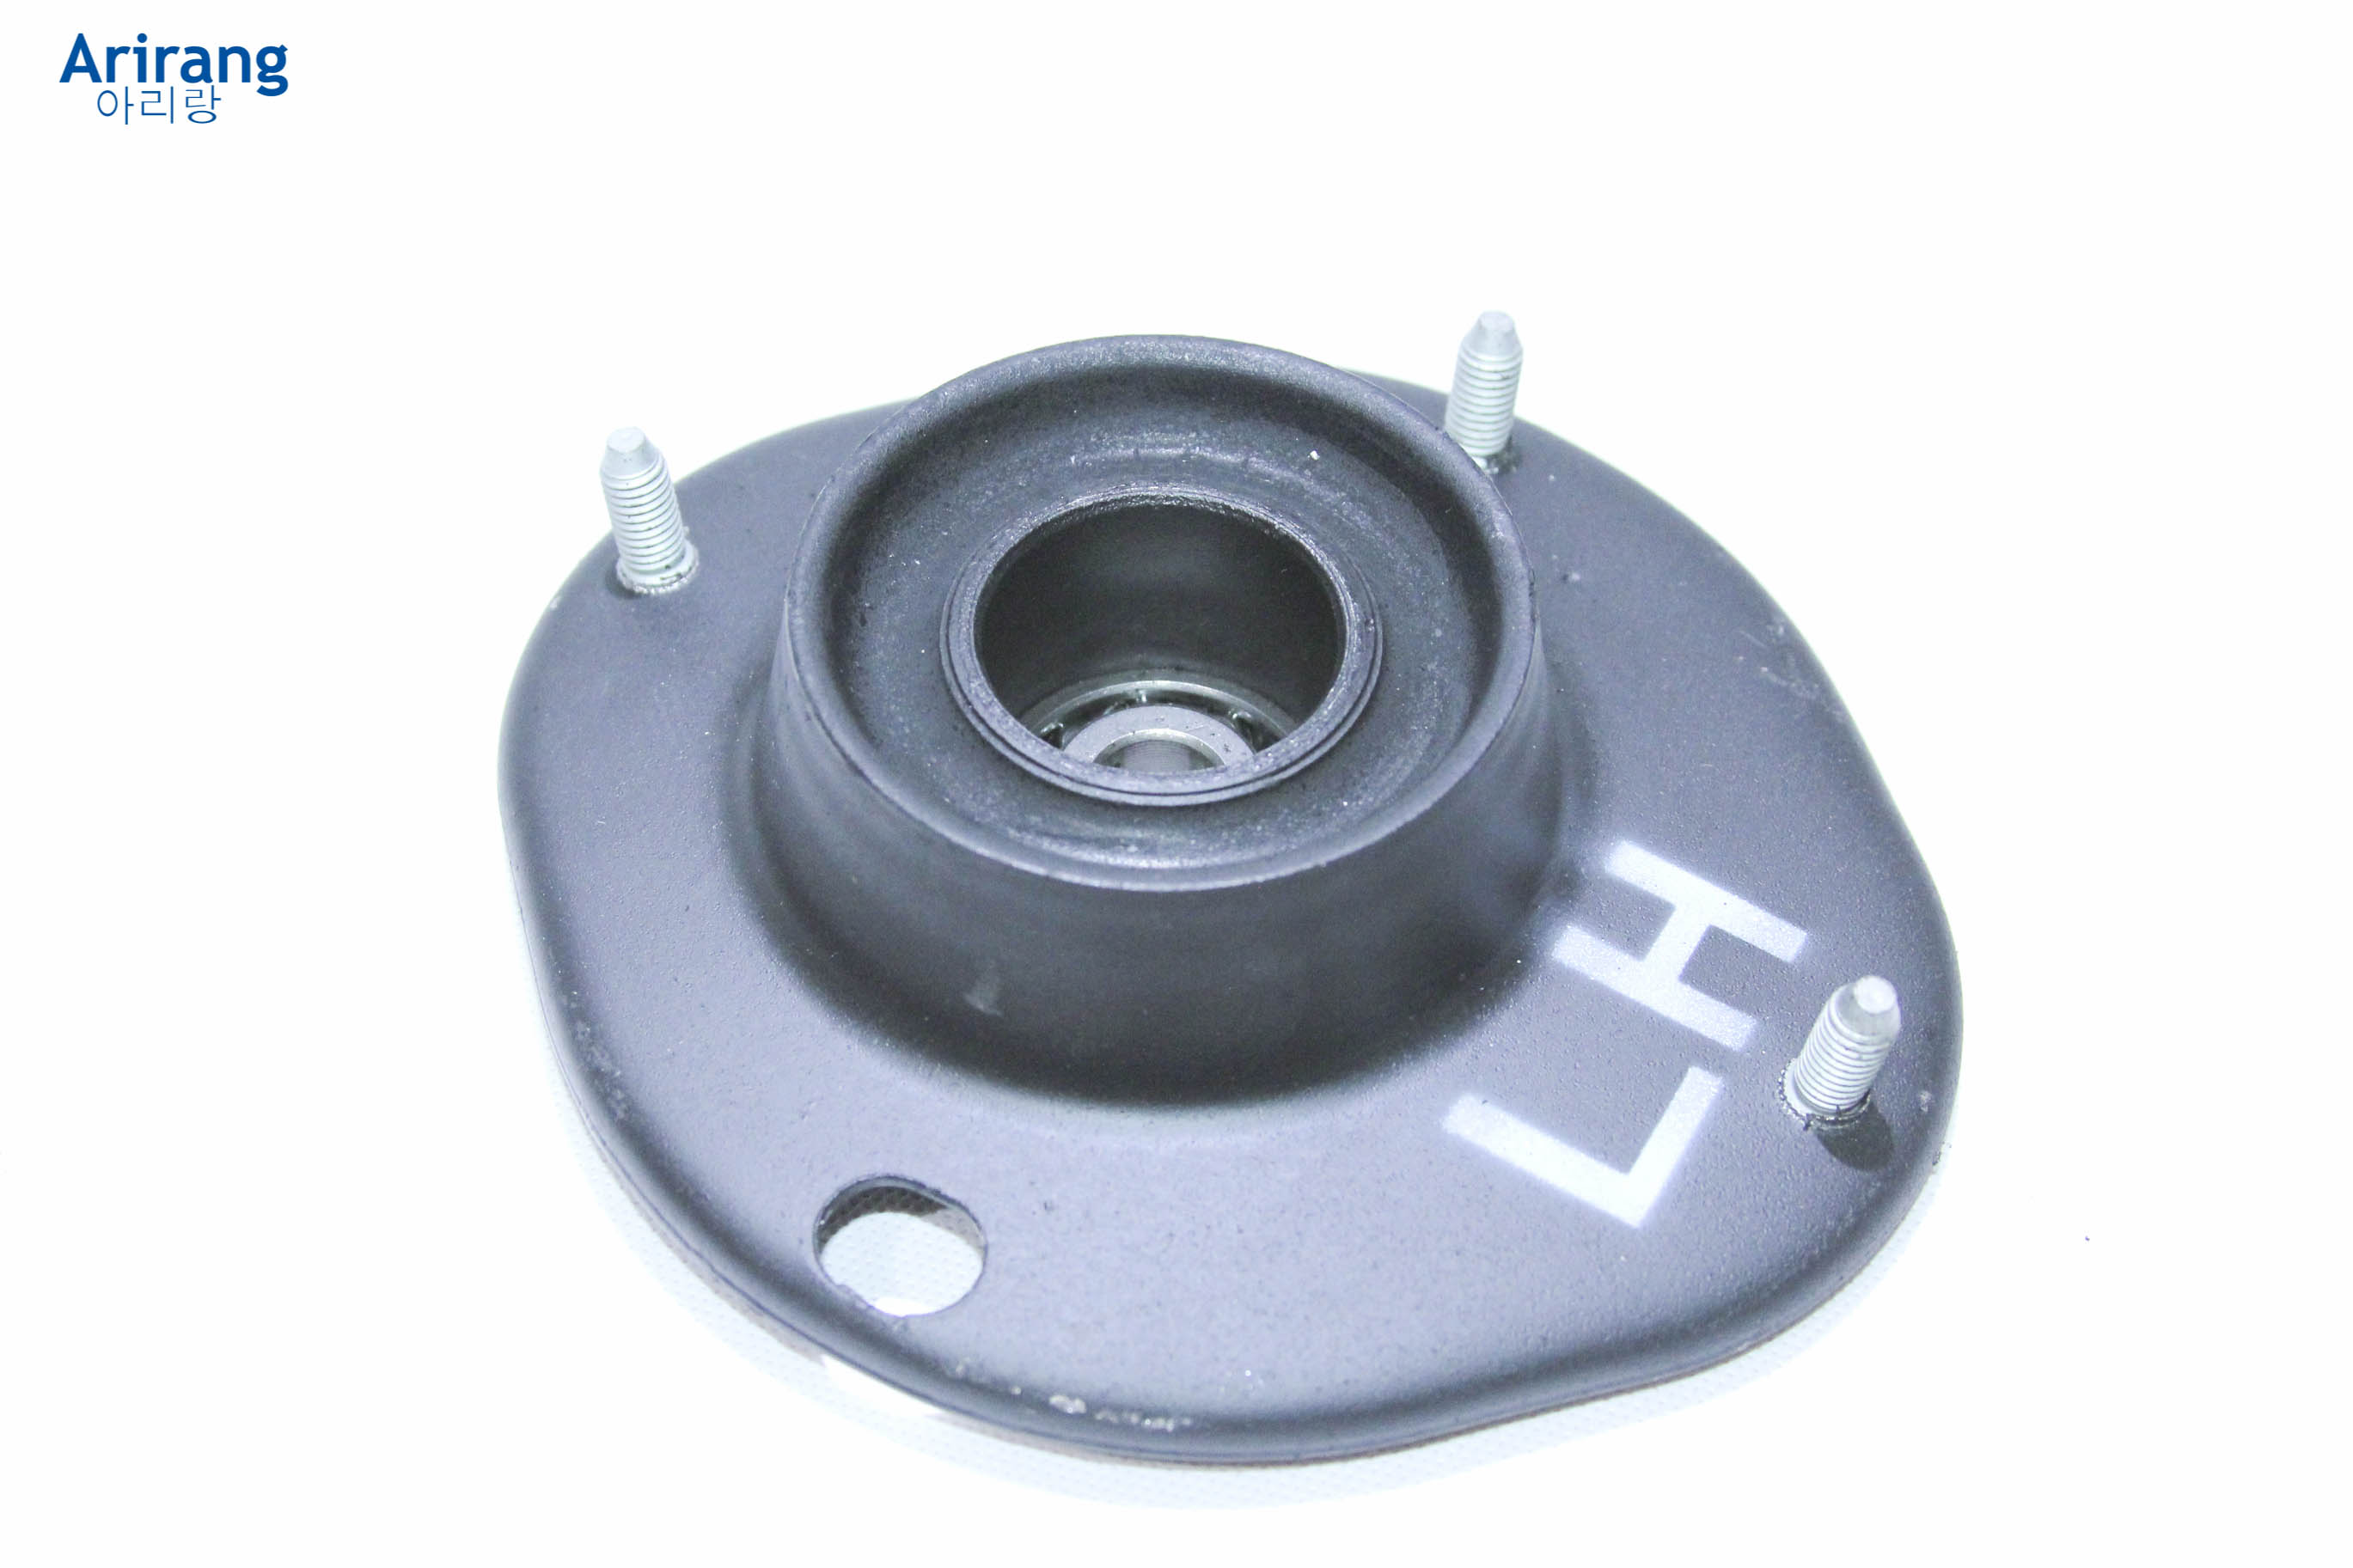 Опора переднего амортизатора левая - Arirang ARG24-1047L